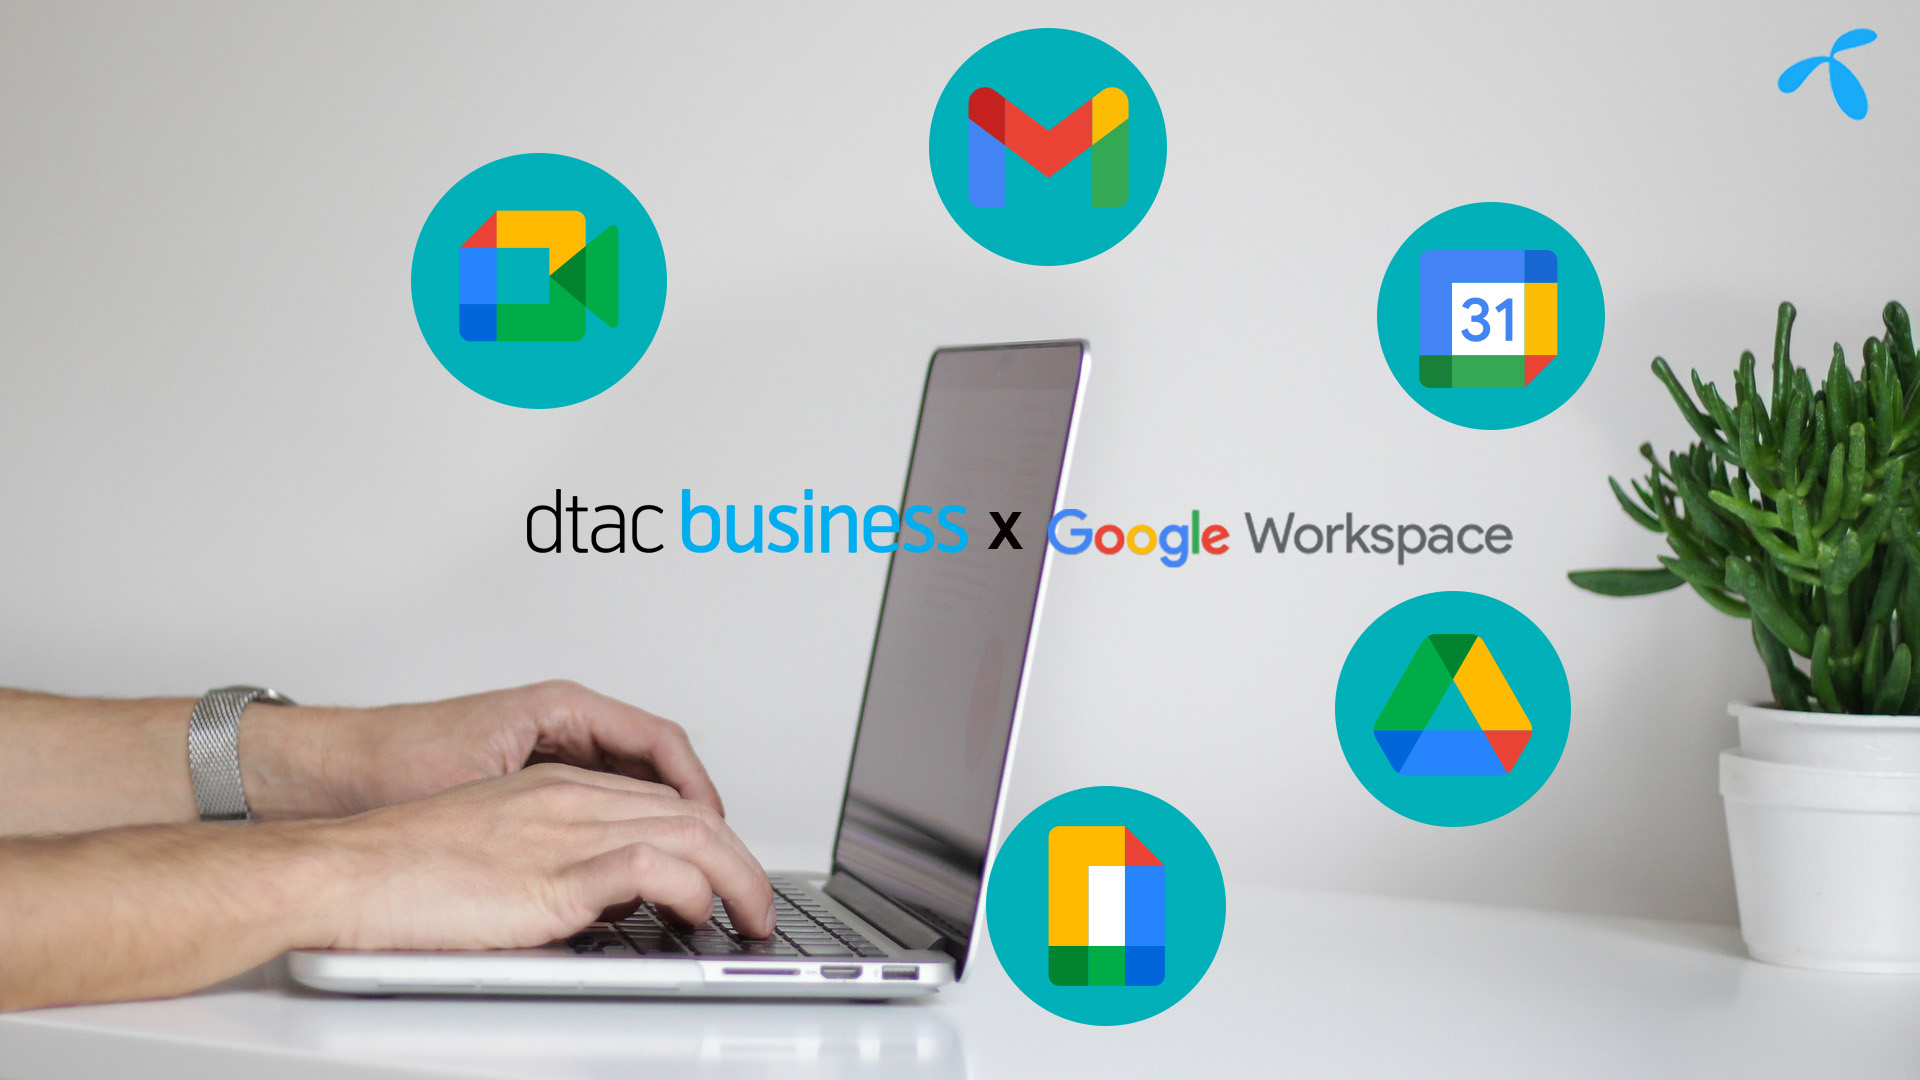 dtac business X Google Workspace ช่วย SMEs ไทยในช่วงล็อกดาวน์และ WFH ได้อย่างไร?